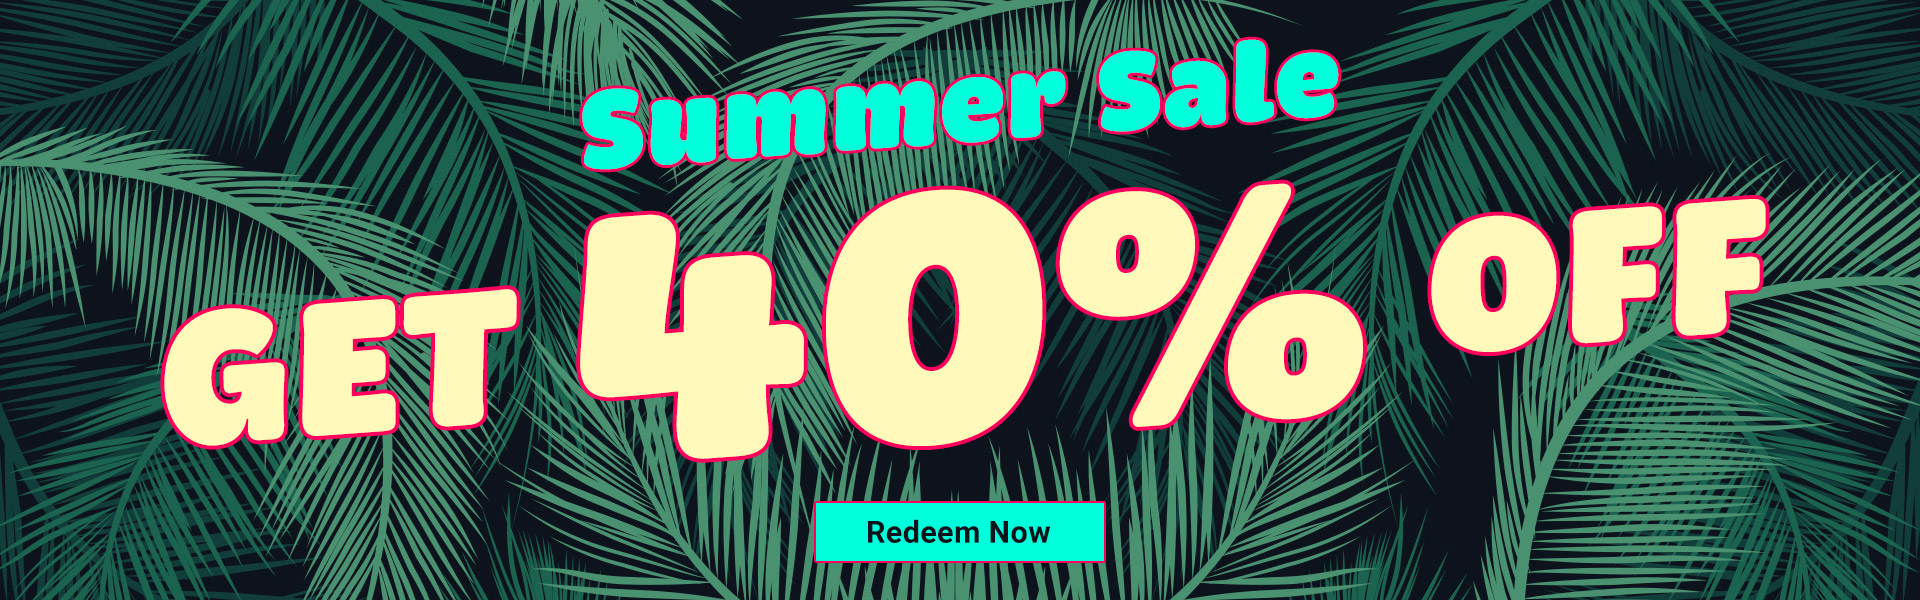 Sean Cody's Summer Sale